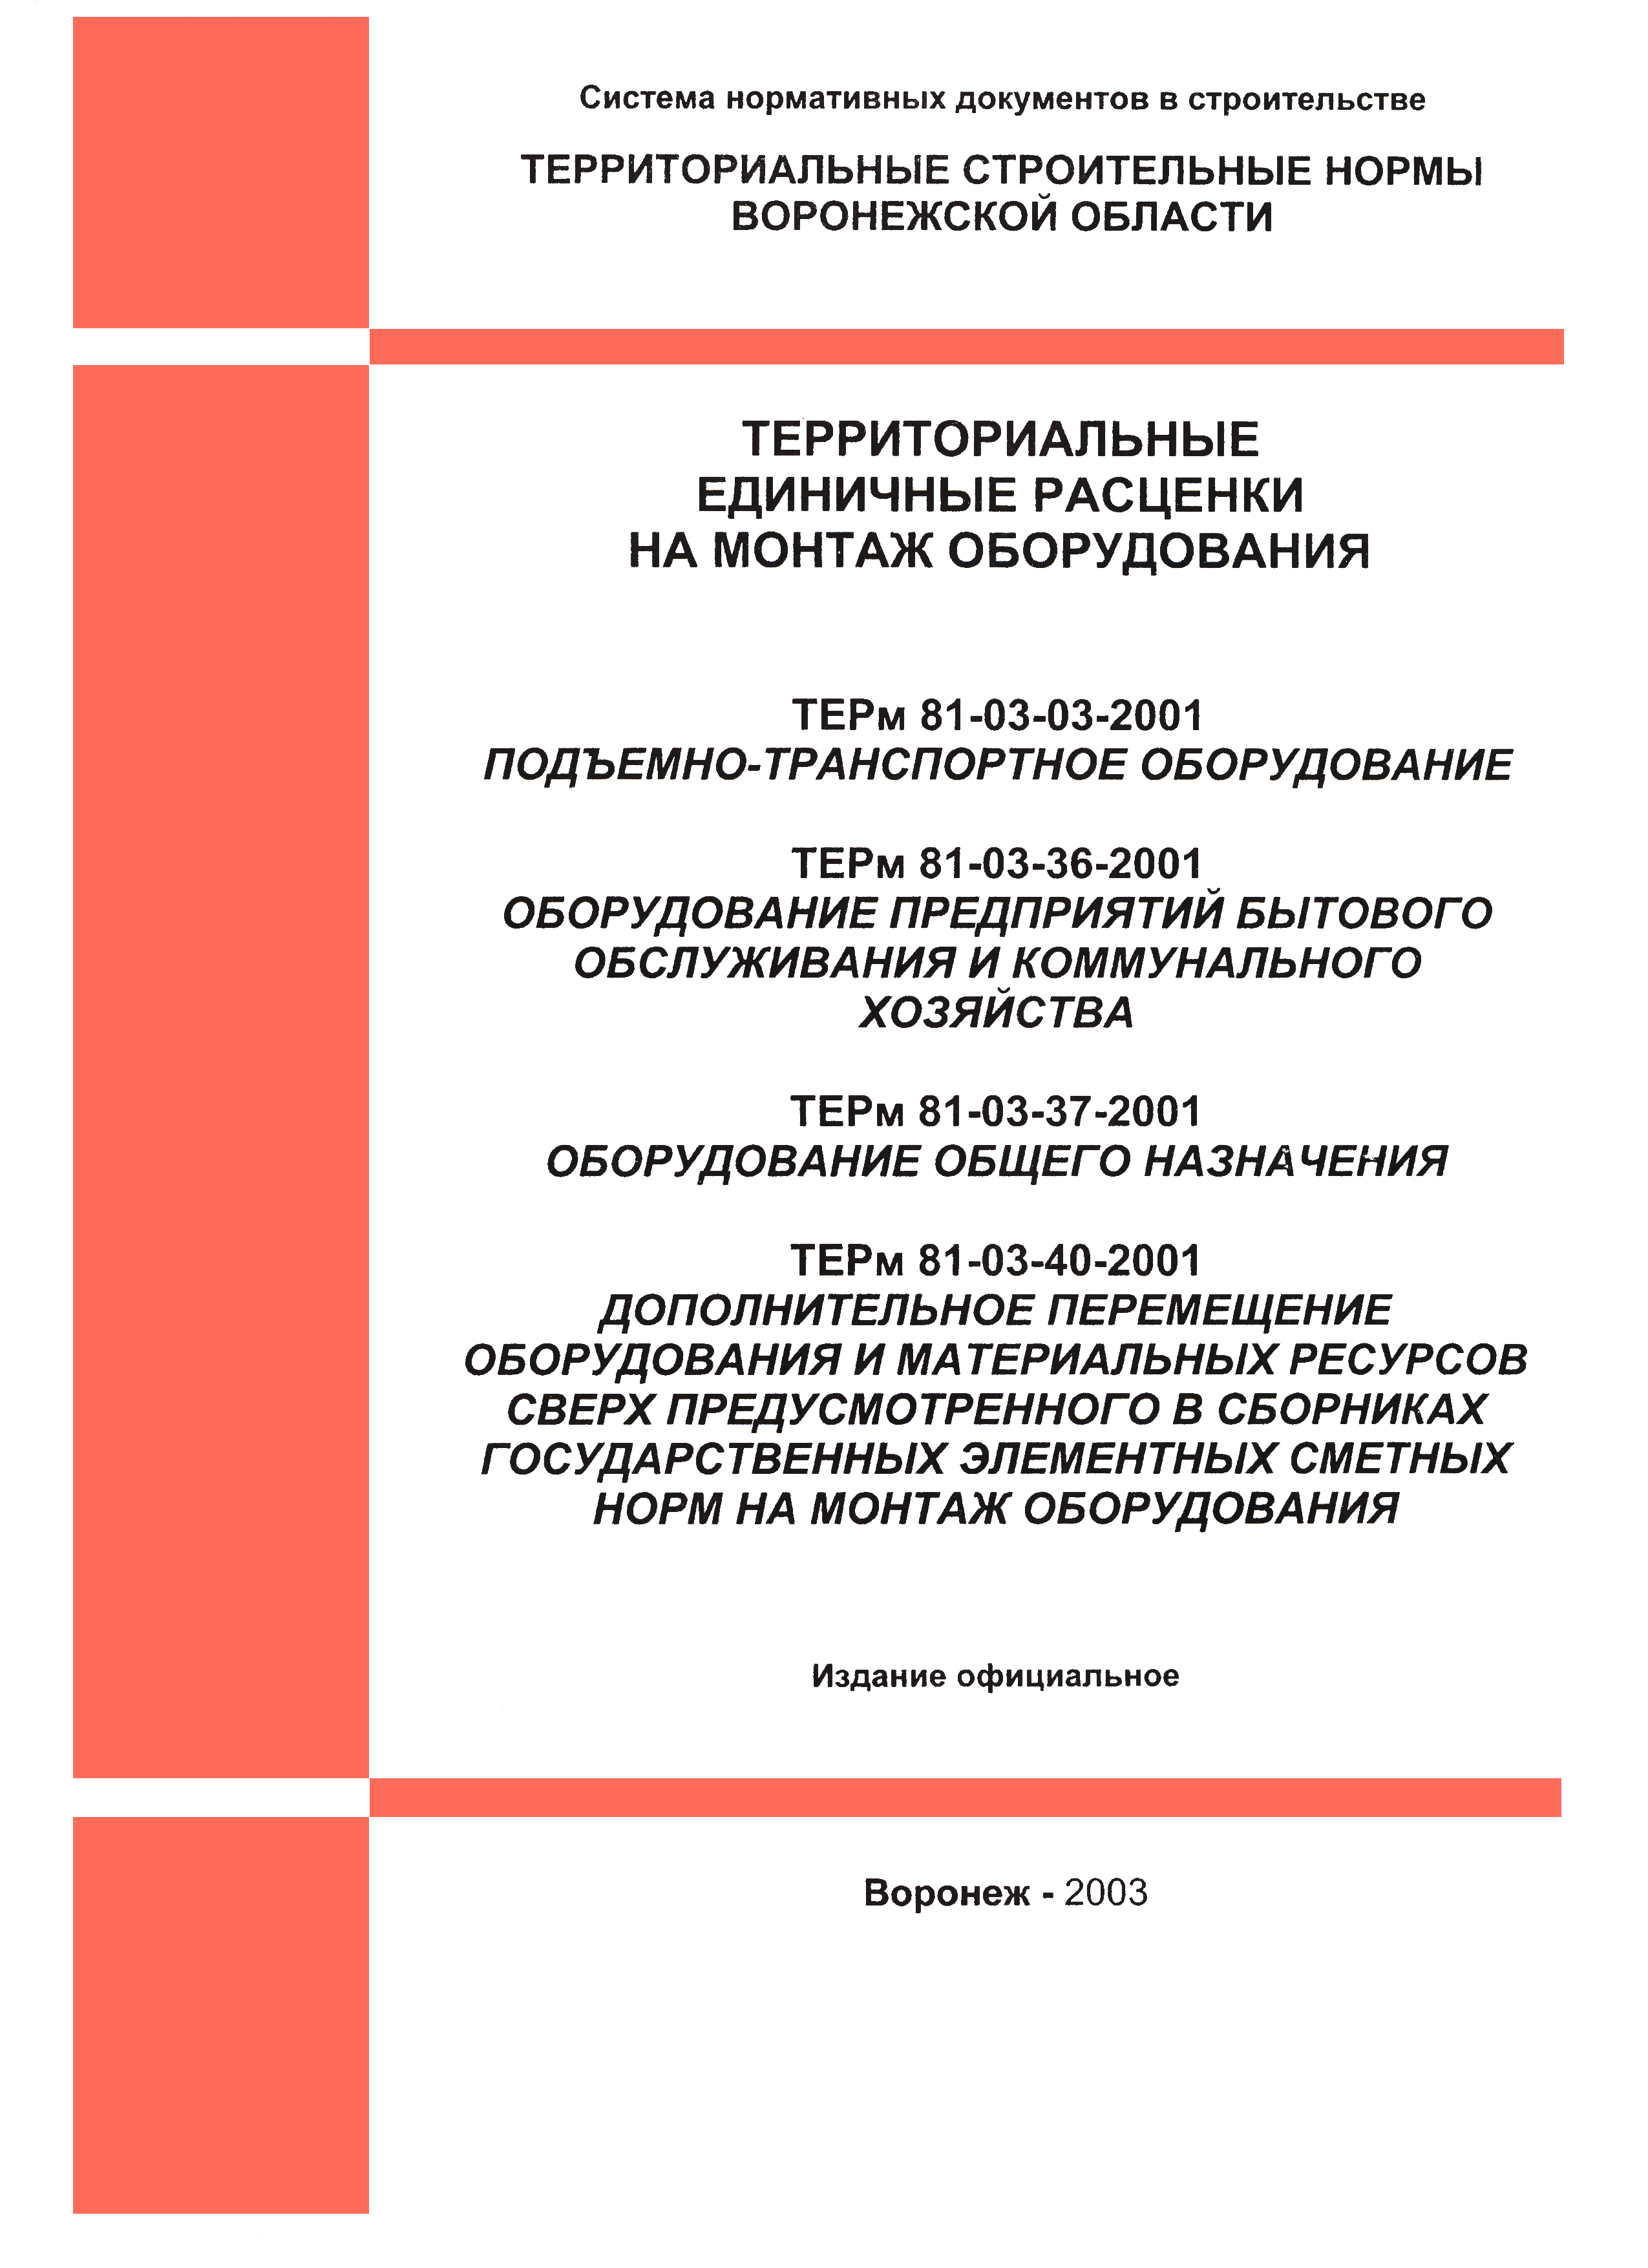 ТЕРм Воронежской области 81-03-37-2001